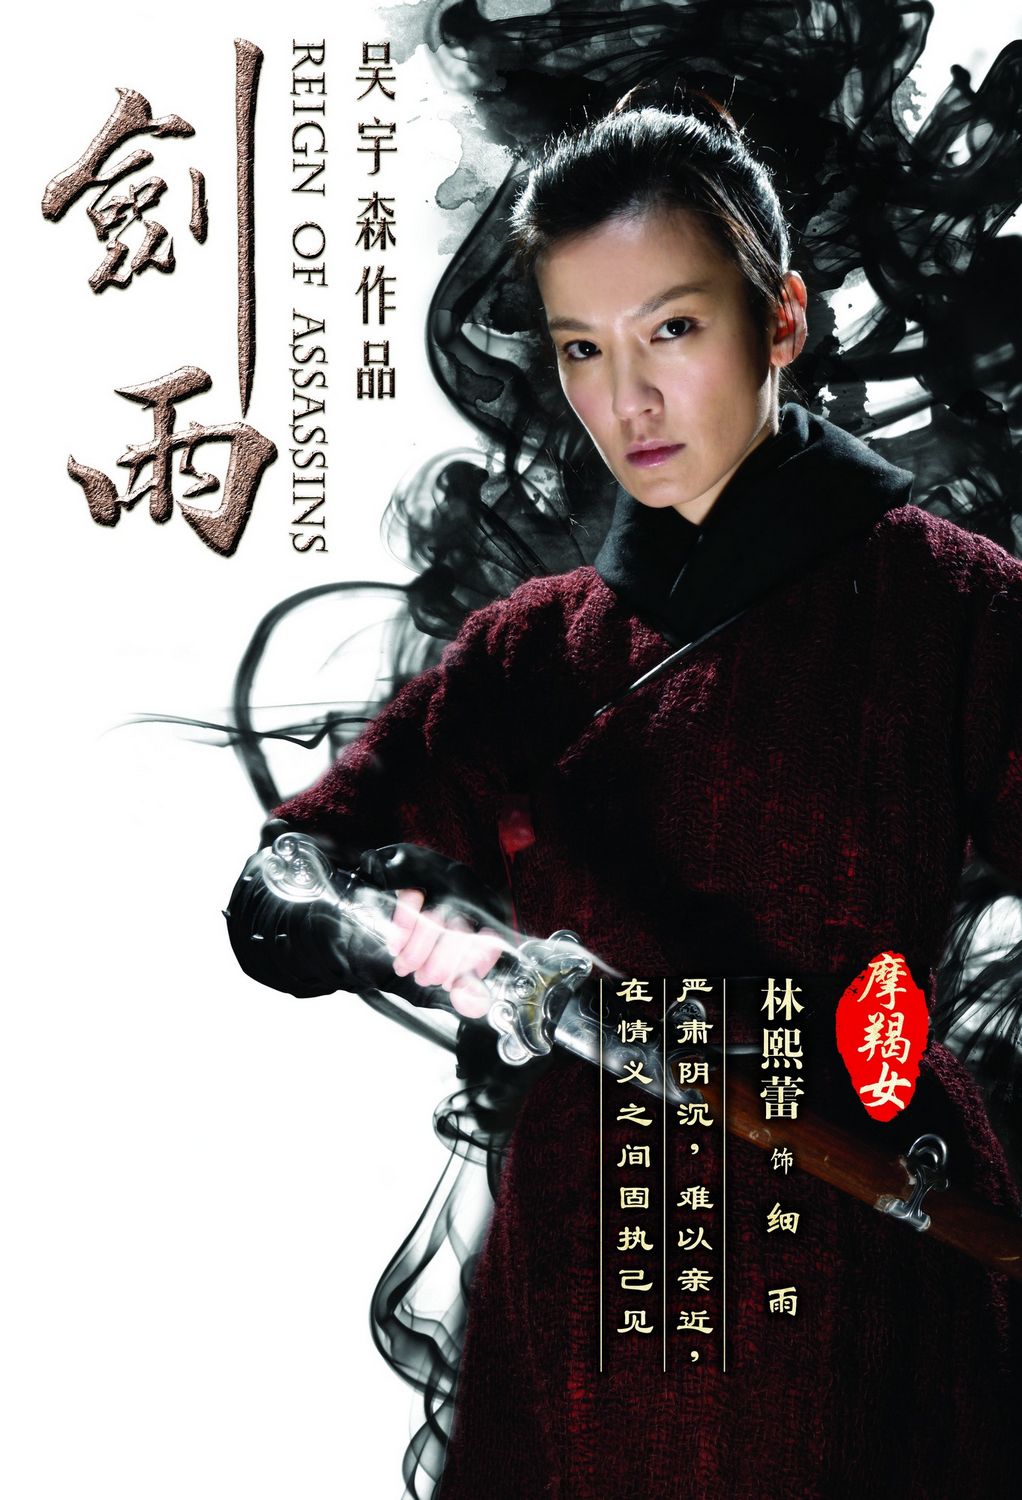 Extra Large Movie Poster Image for Jianyu (#2 of 11)